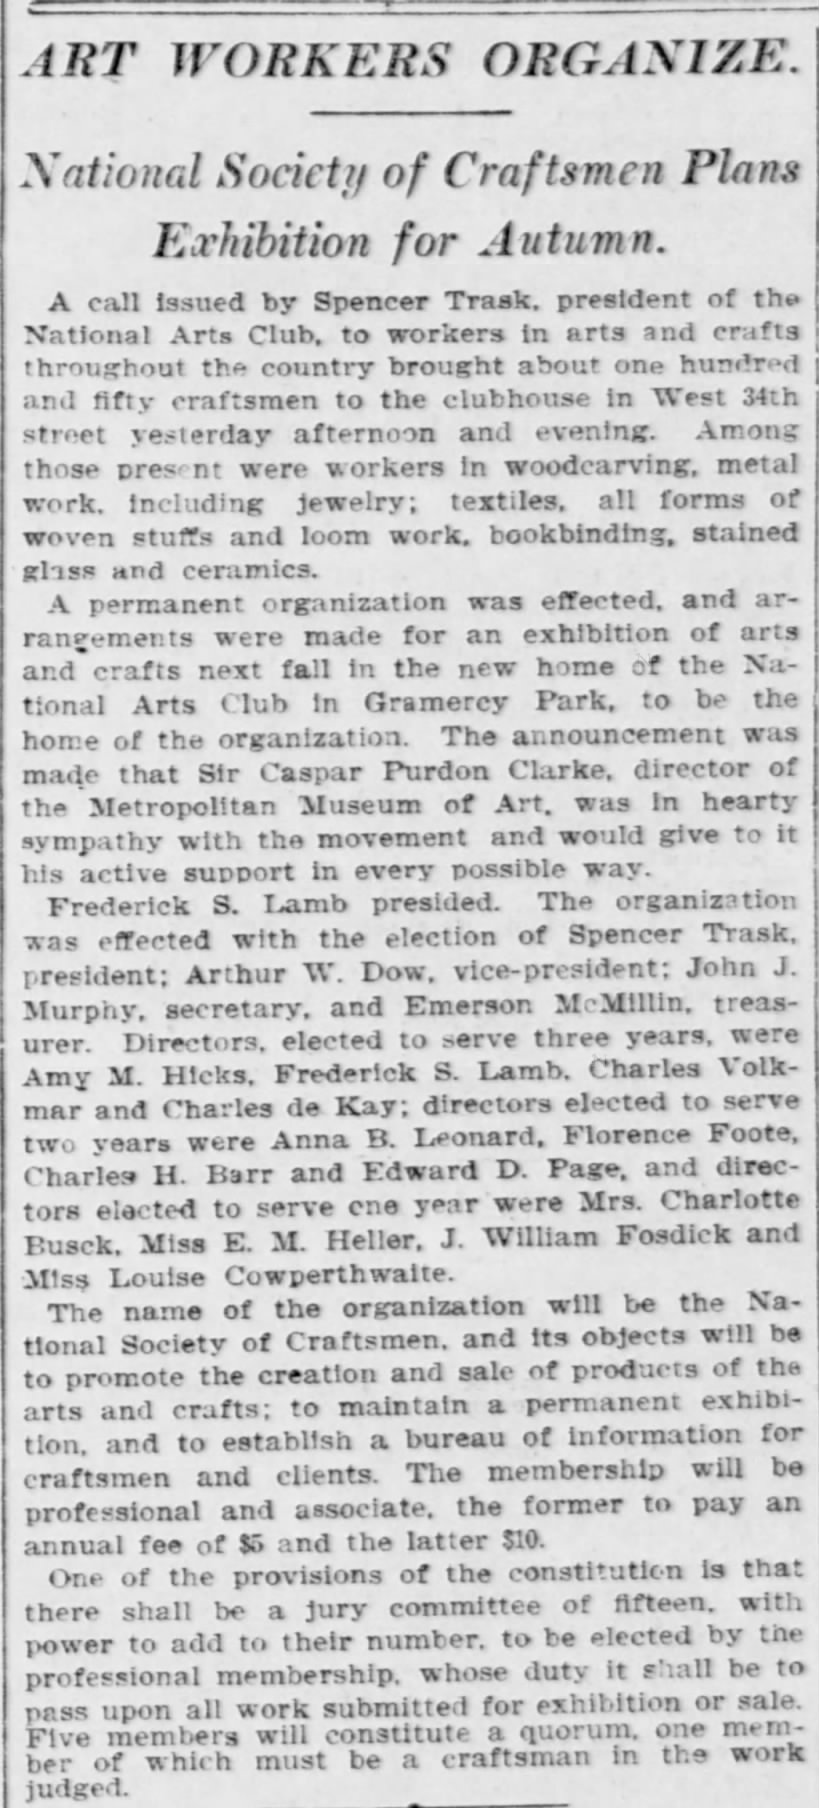 Art Workers Organize. The New York Tribune (New York, New York) April 28, 1906, p 6